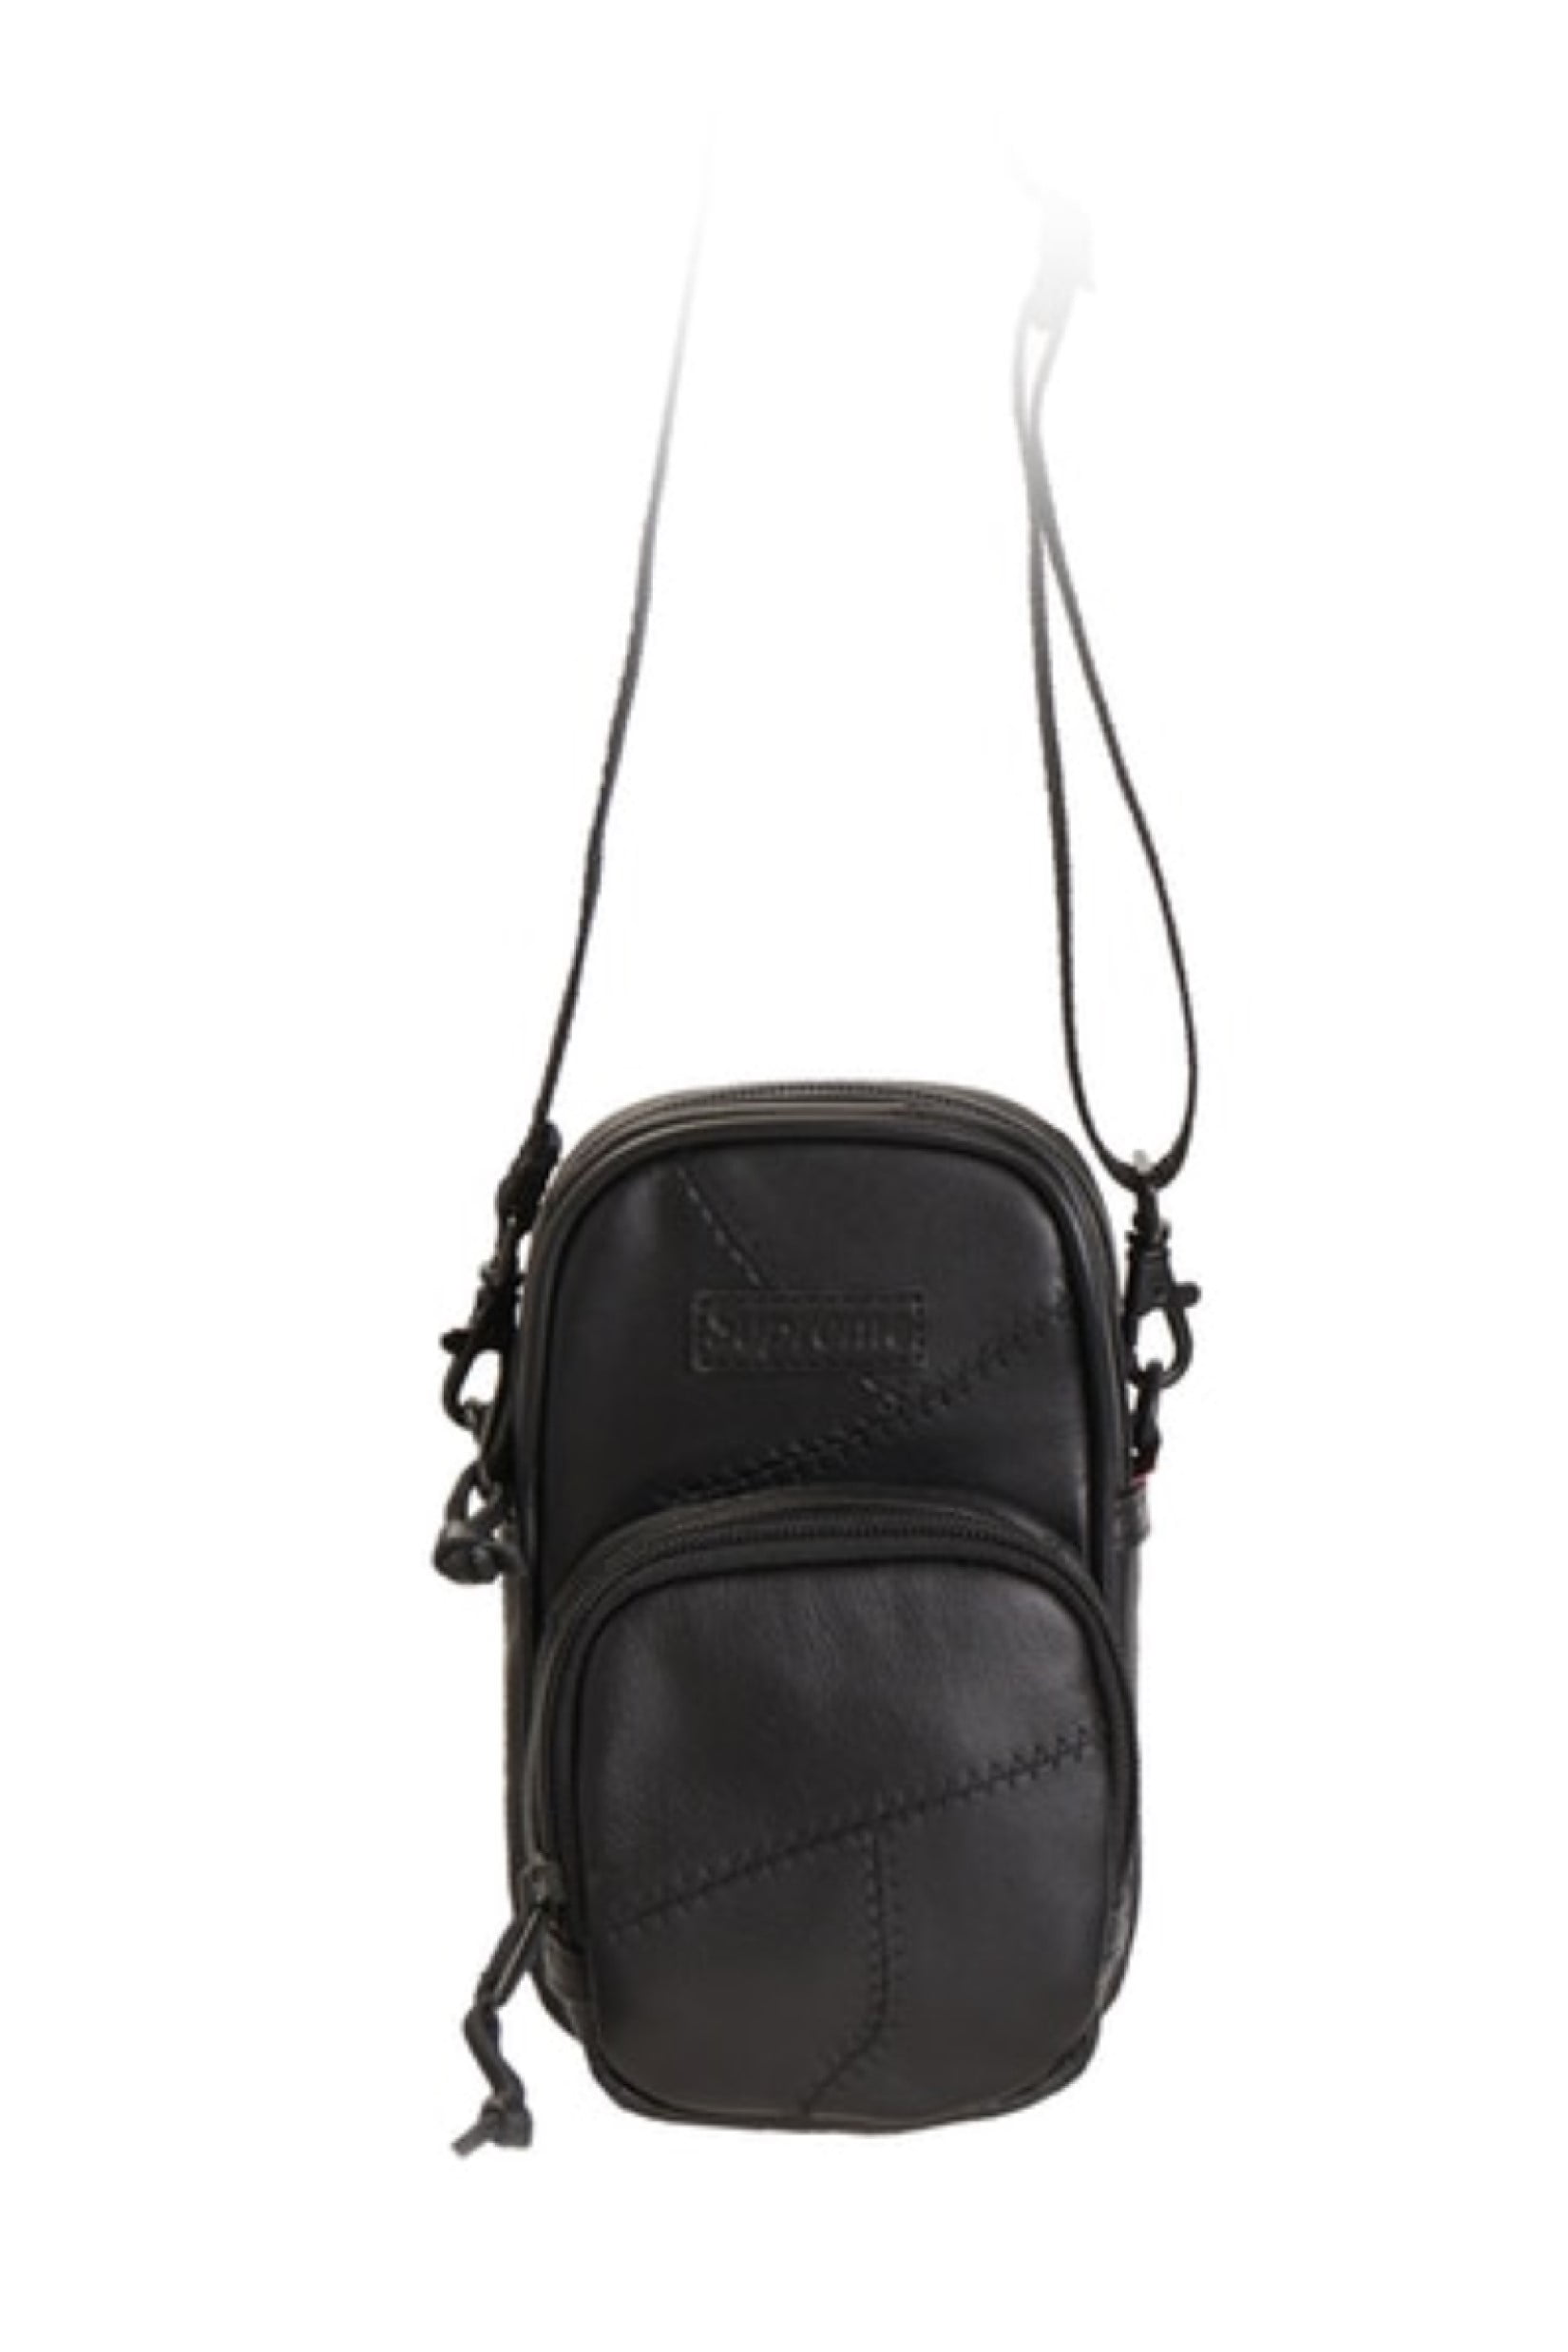 Supreme - Supreme Patchwork Leather Small Shoulder Bag Black - www.semadata.org - www.semadata.org